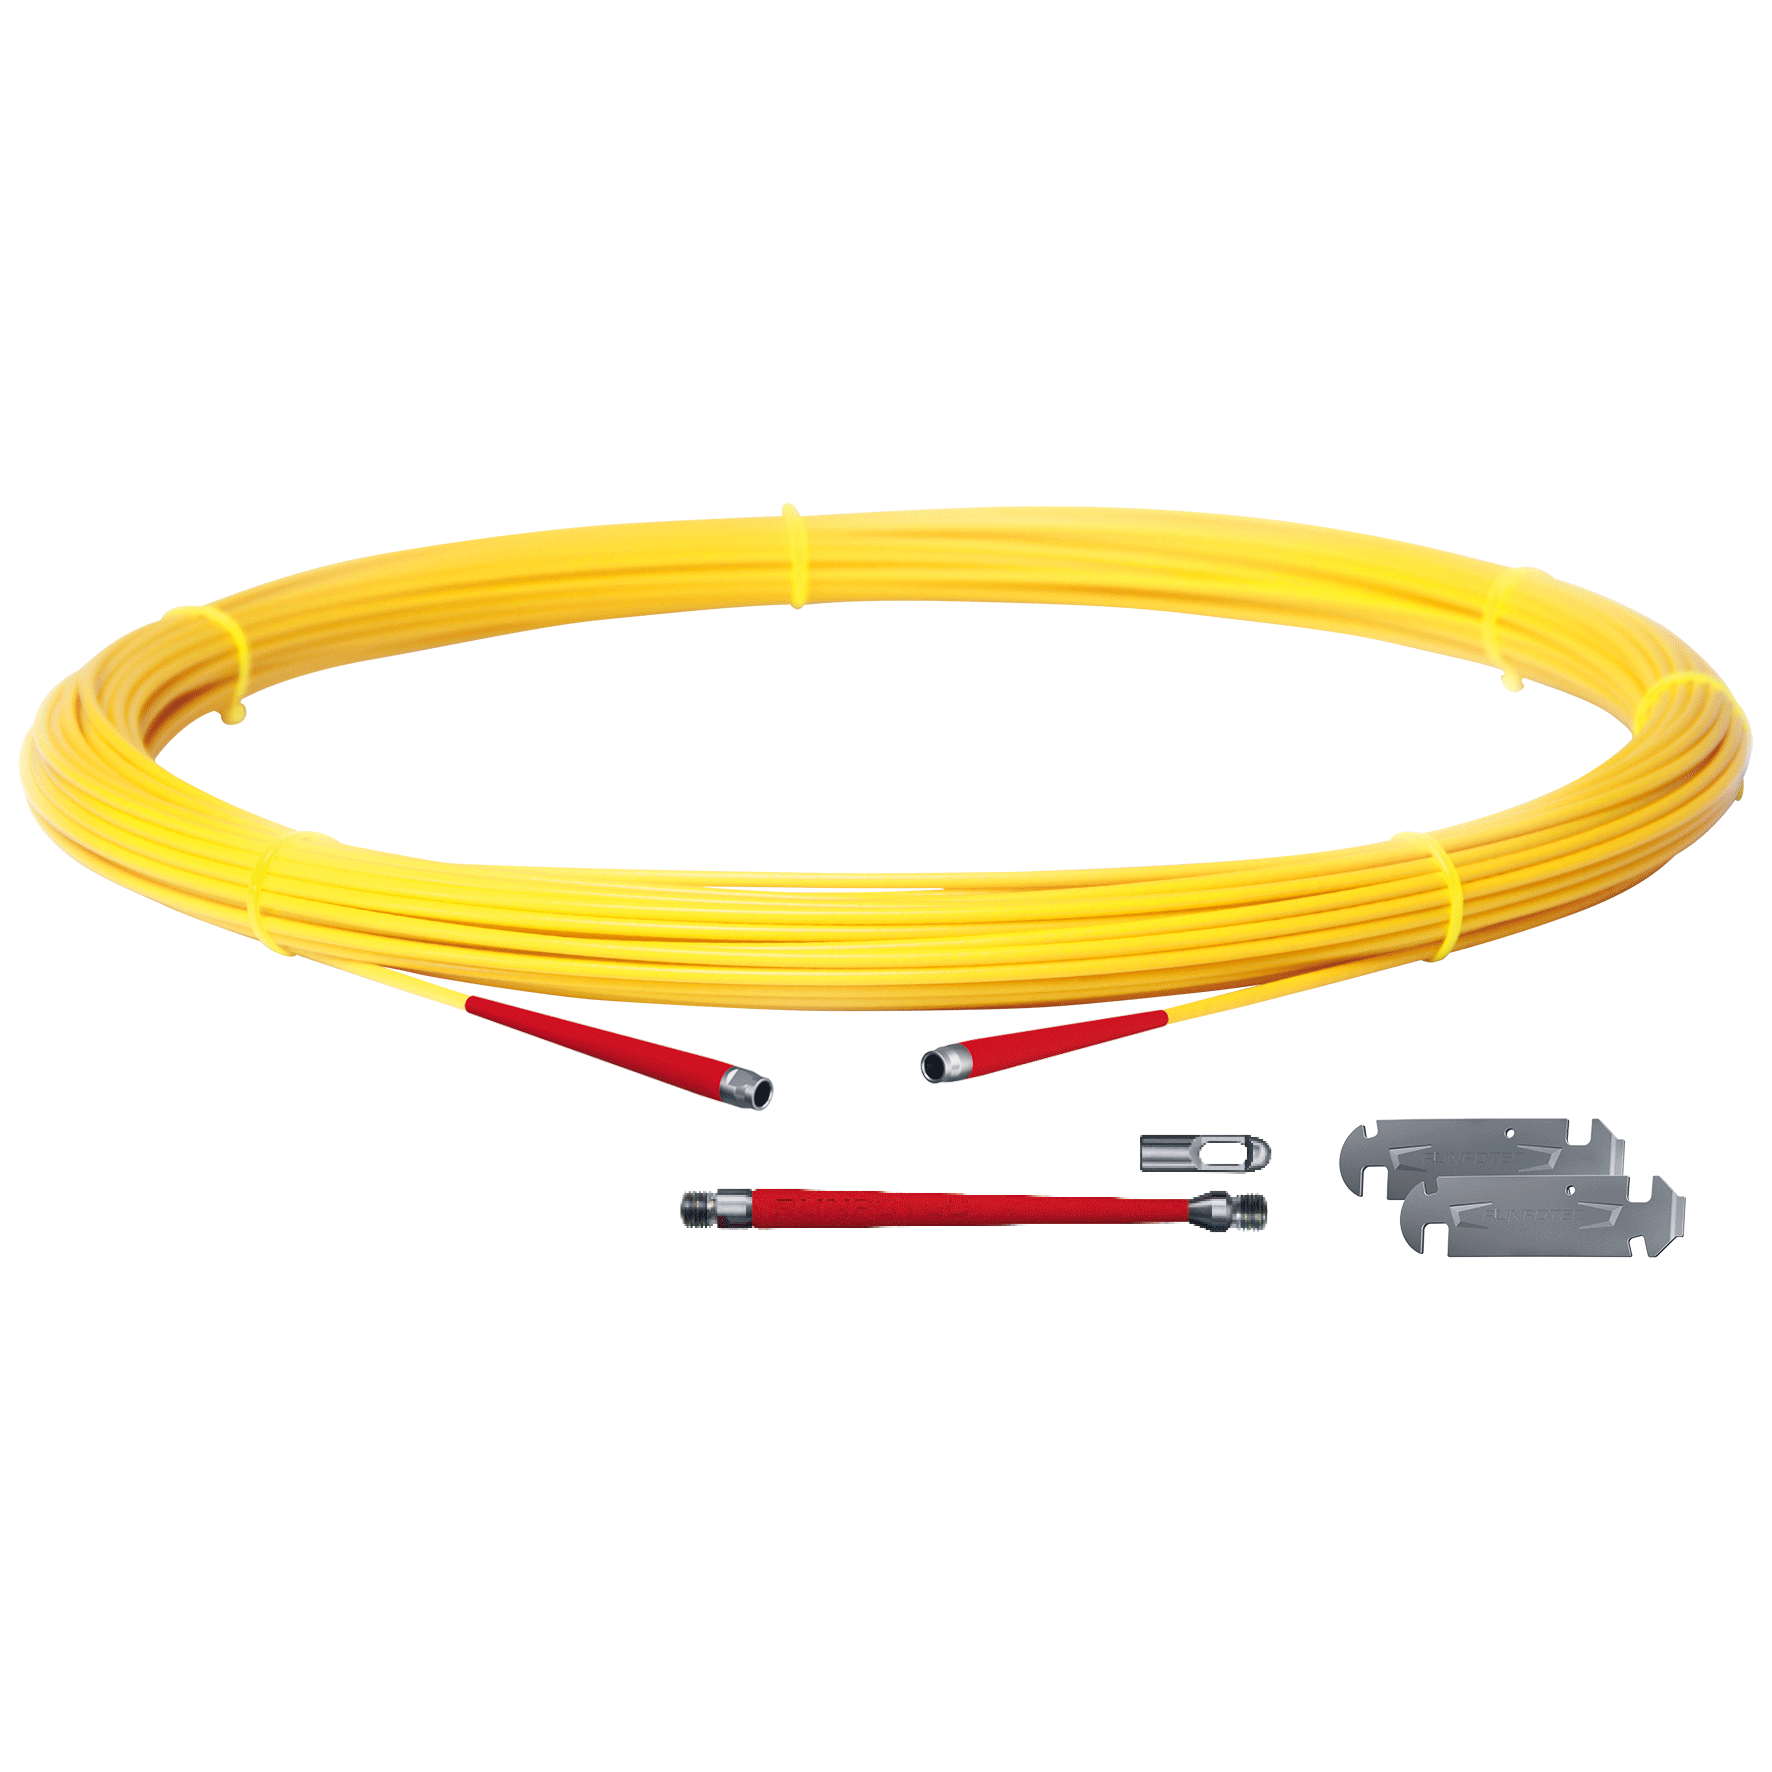 Precursor Glue Lake Taupo GF3 - Tragator cablu din fibra de sticla cu accesorii si contor electronic,  Ø 3mm x 30m